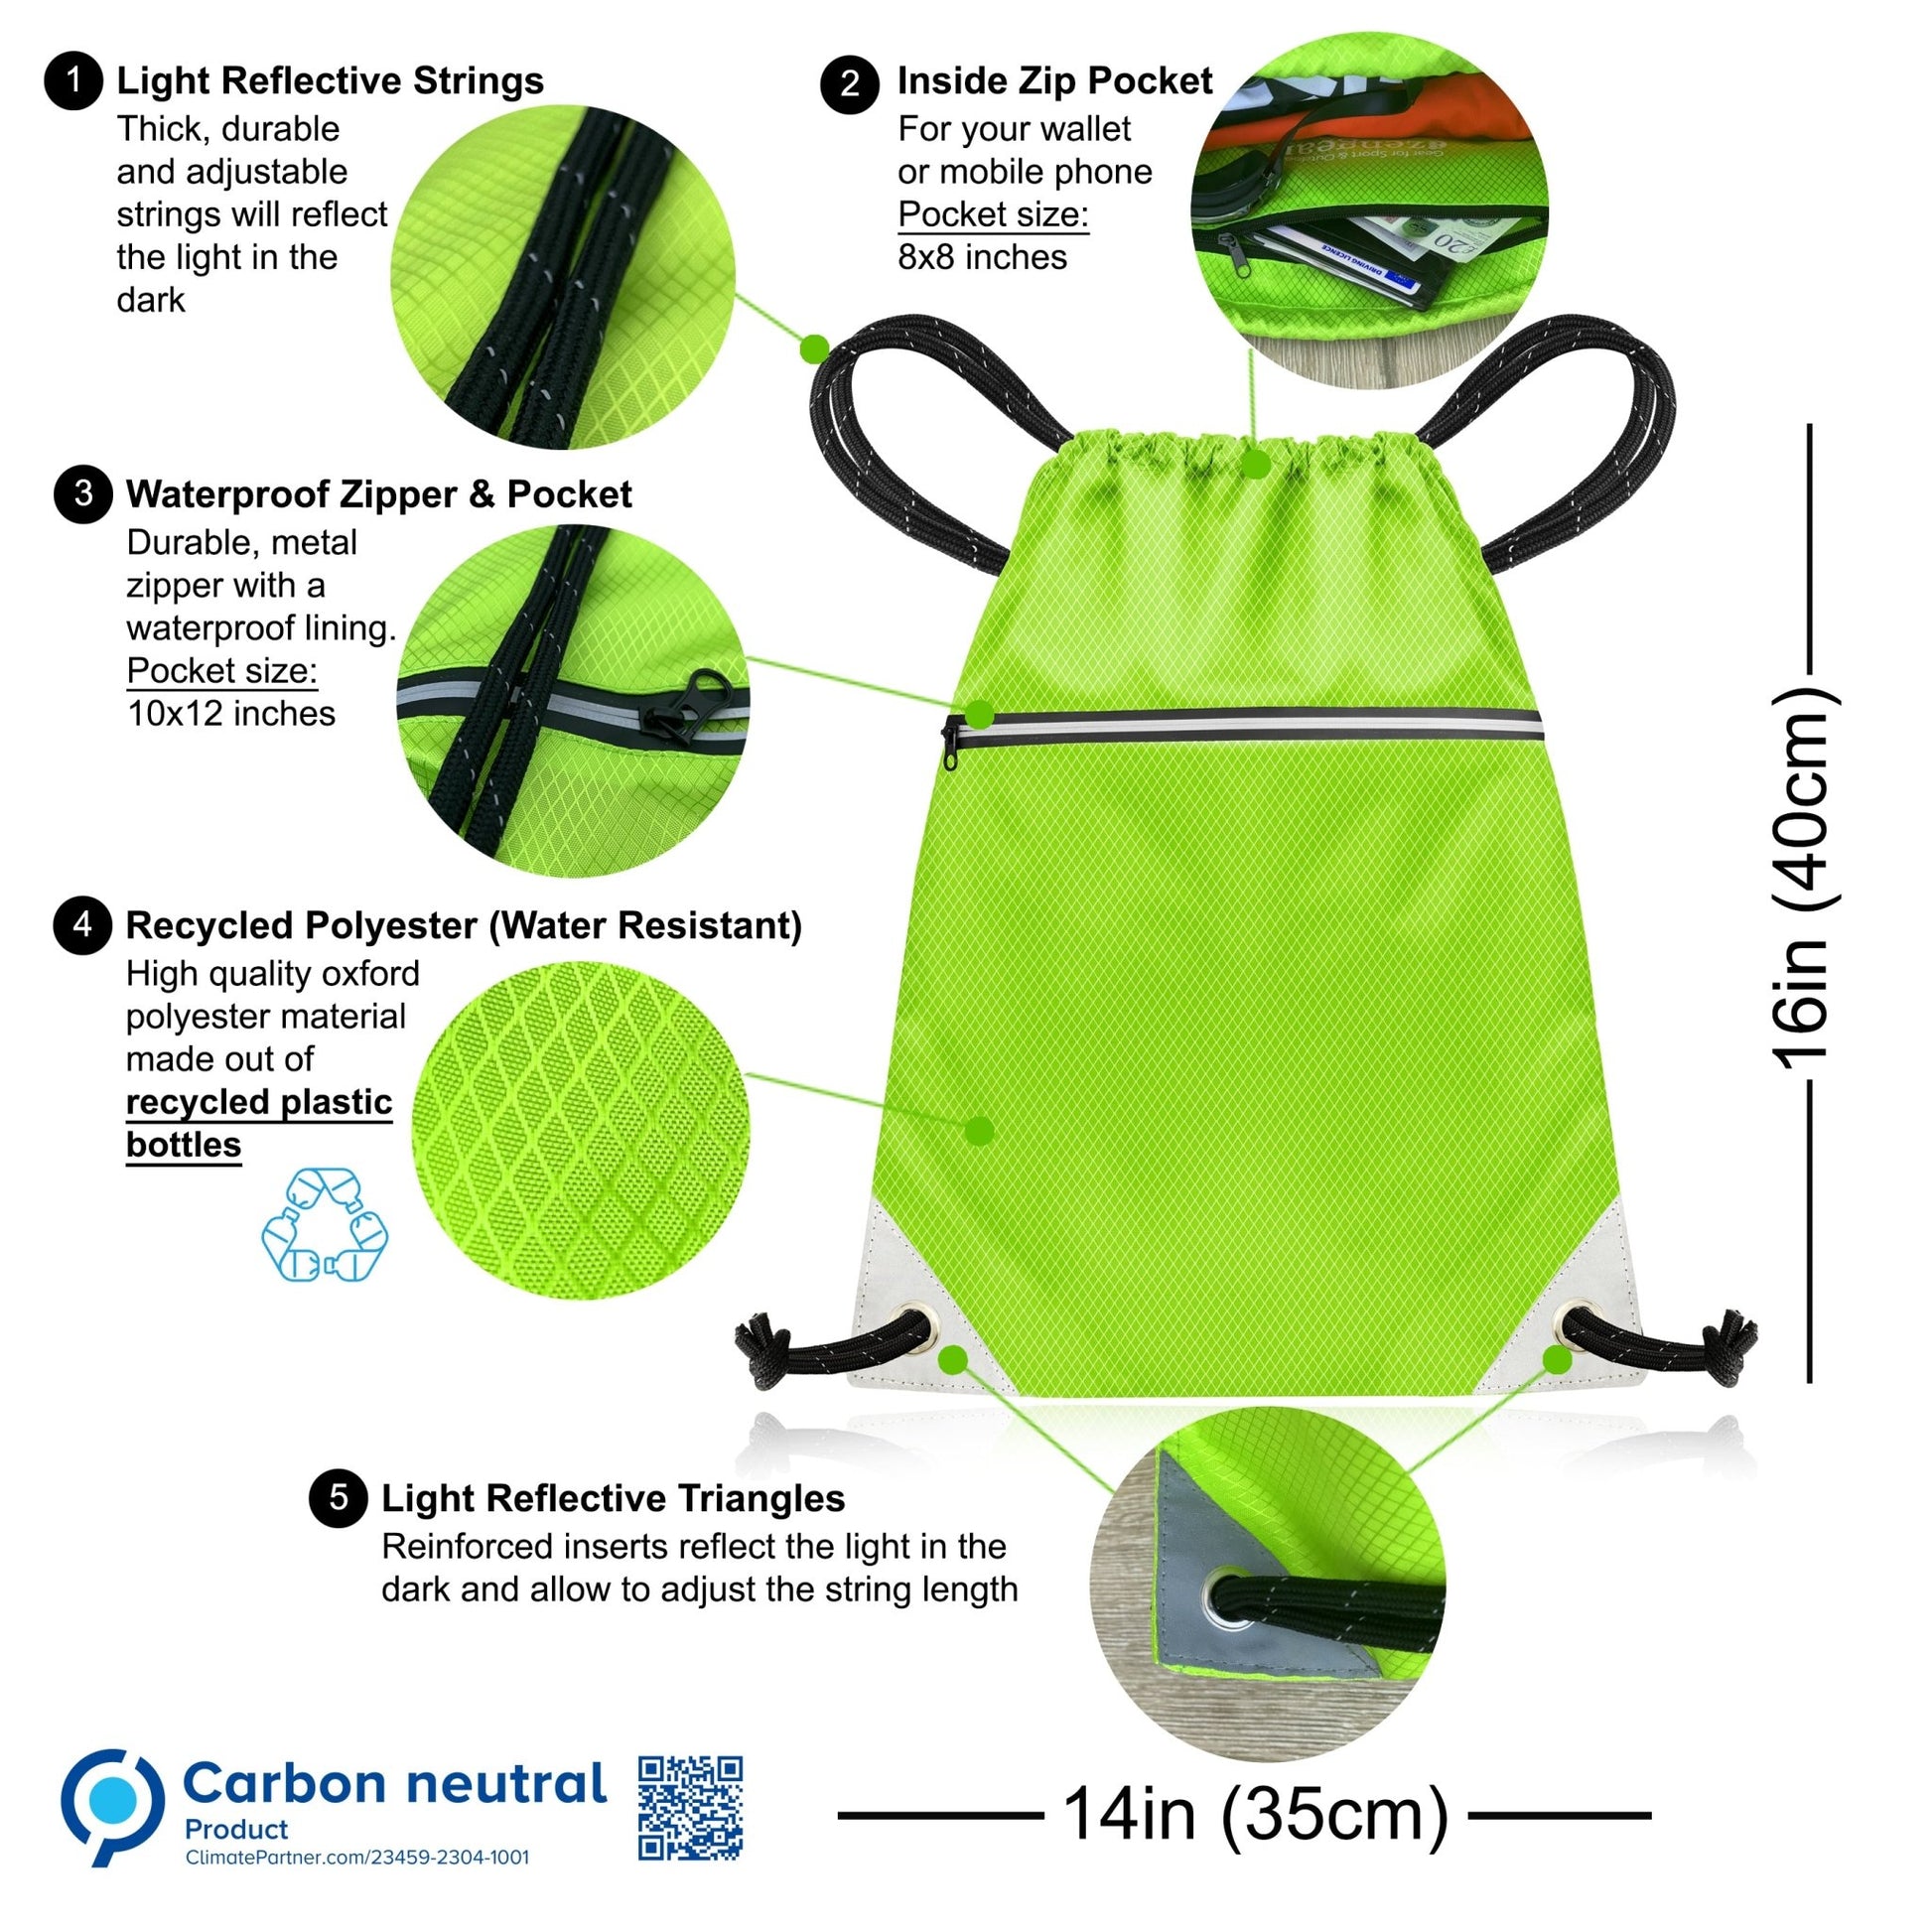 aZengear Waterproof Drawstring Gym Bag for PE, Swim, Sport, Yoga